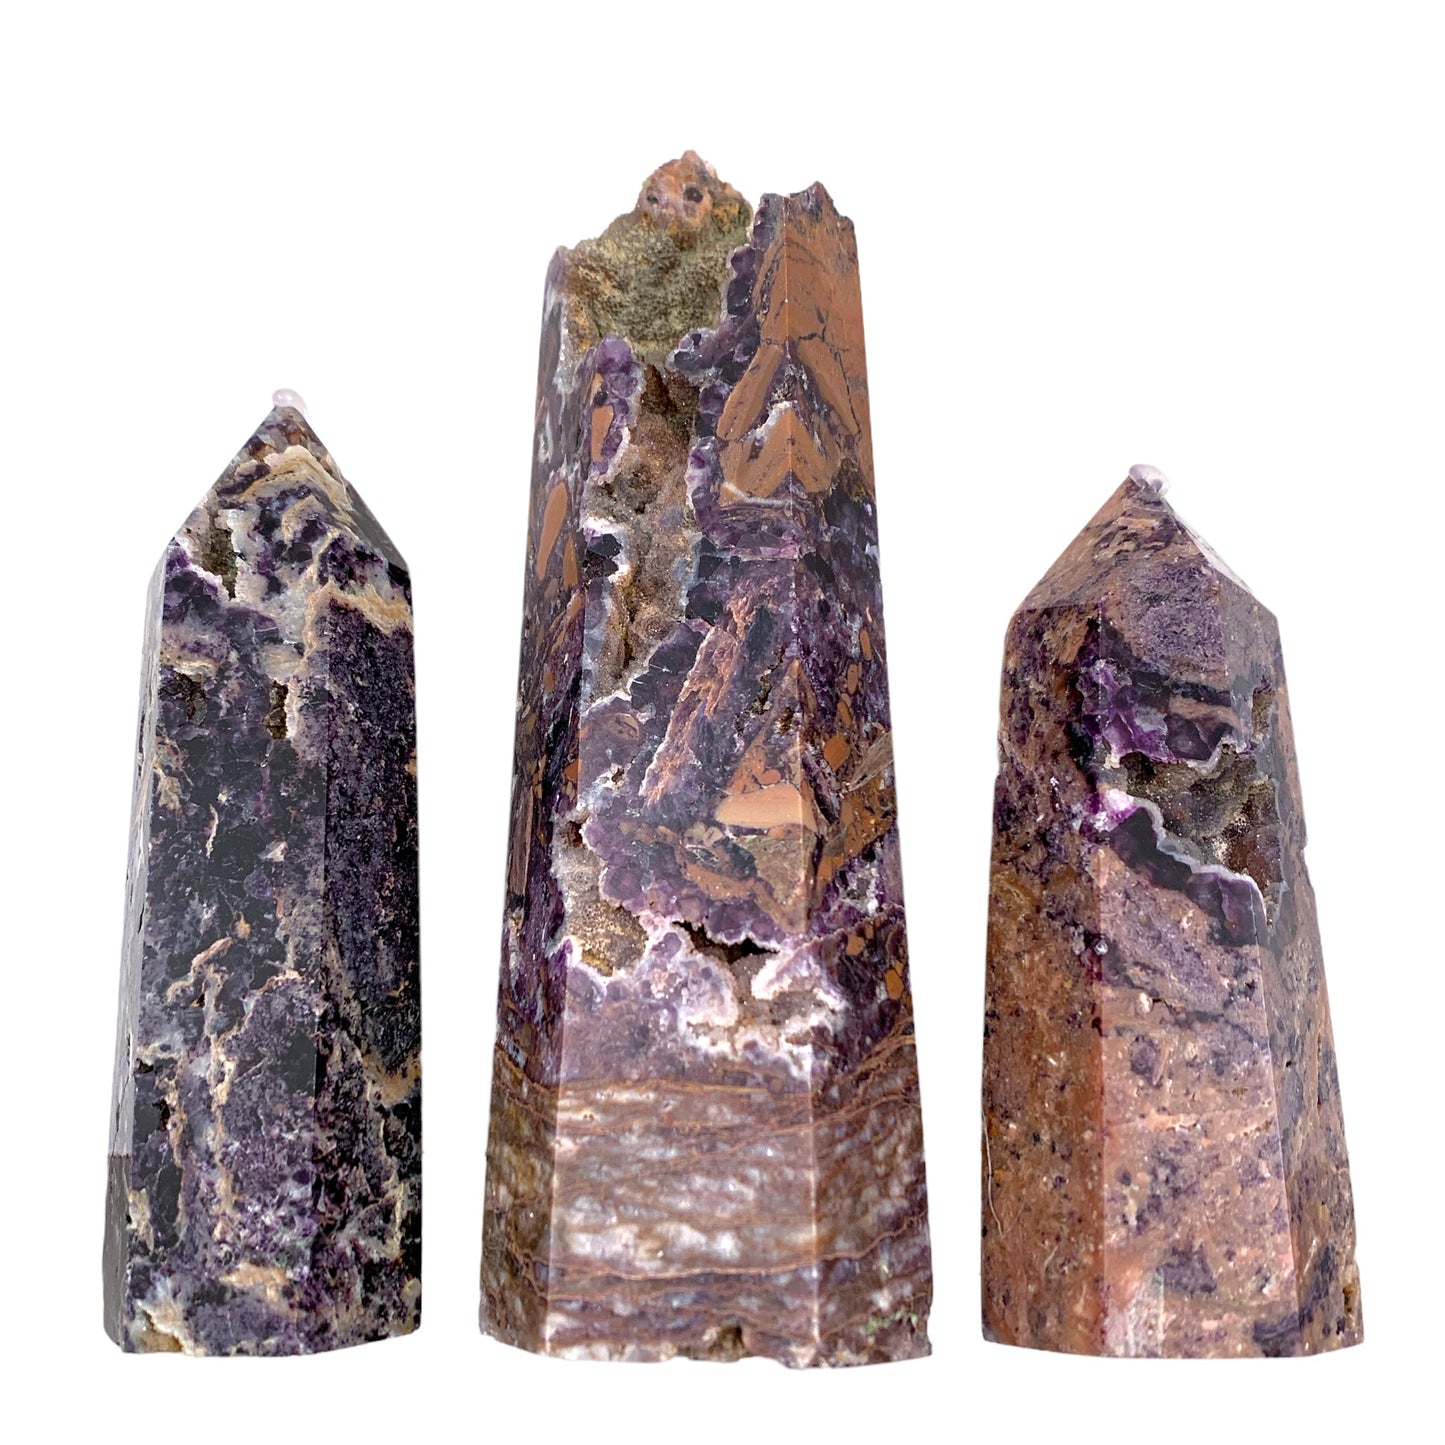 Sphalerite with Druzy - Points Large - 10-20 cm - Price per Gram - China - NEW722